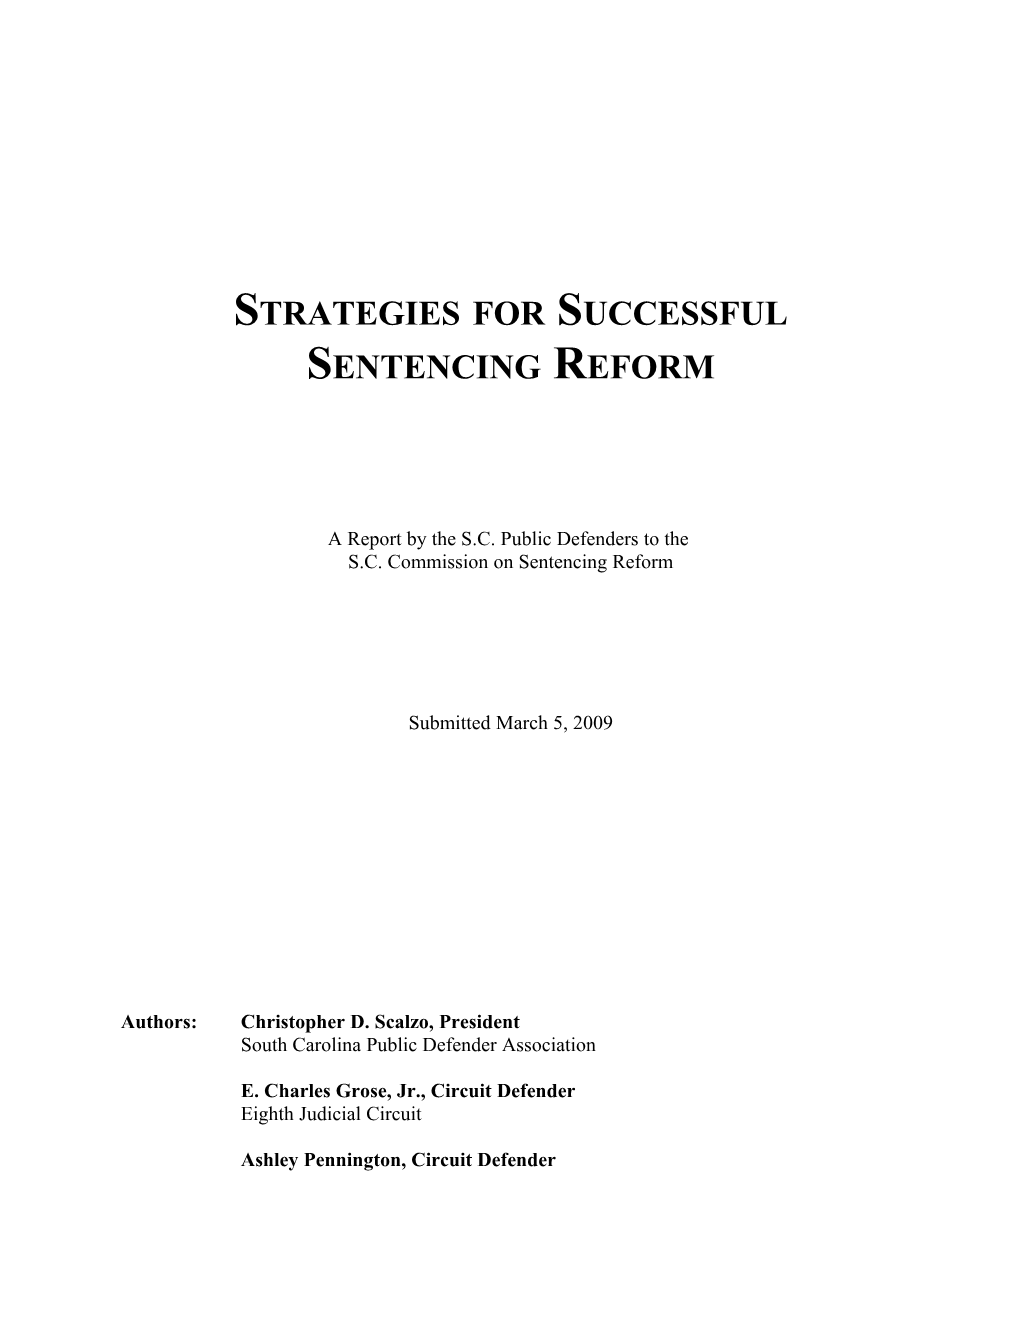 Strategies for Successful Sentencing Reform